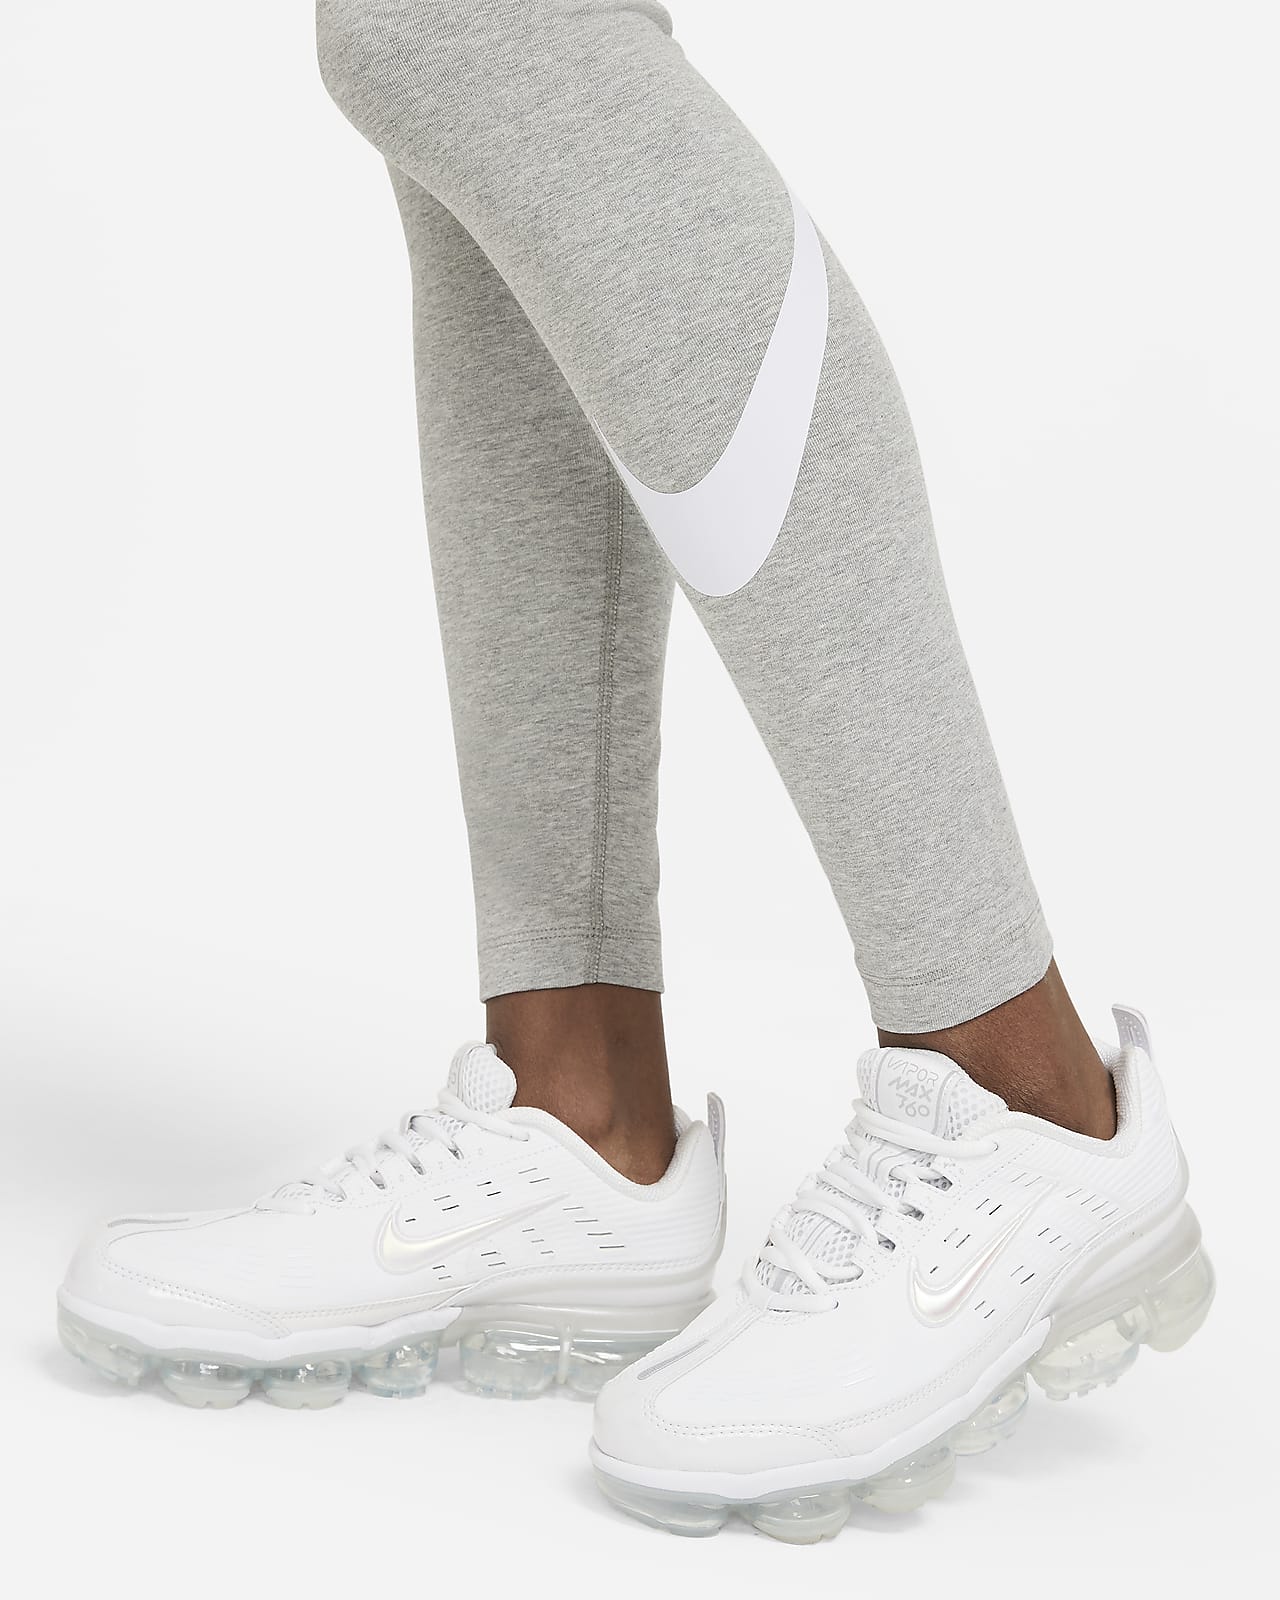 Legging Swoosh taille mi-haute Nike Sportswear Essential pour Femme